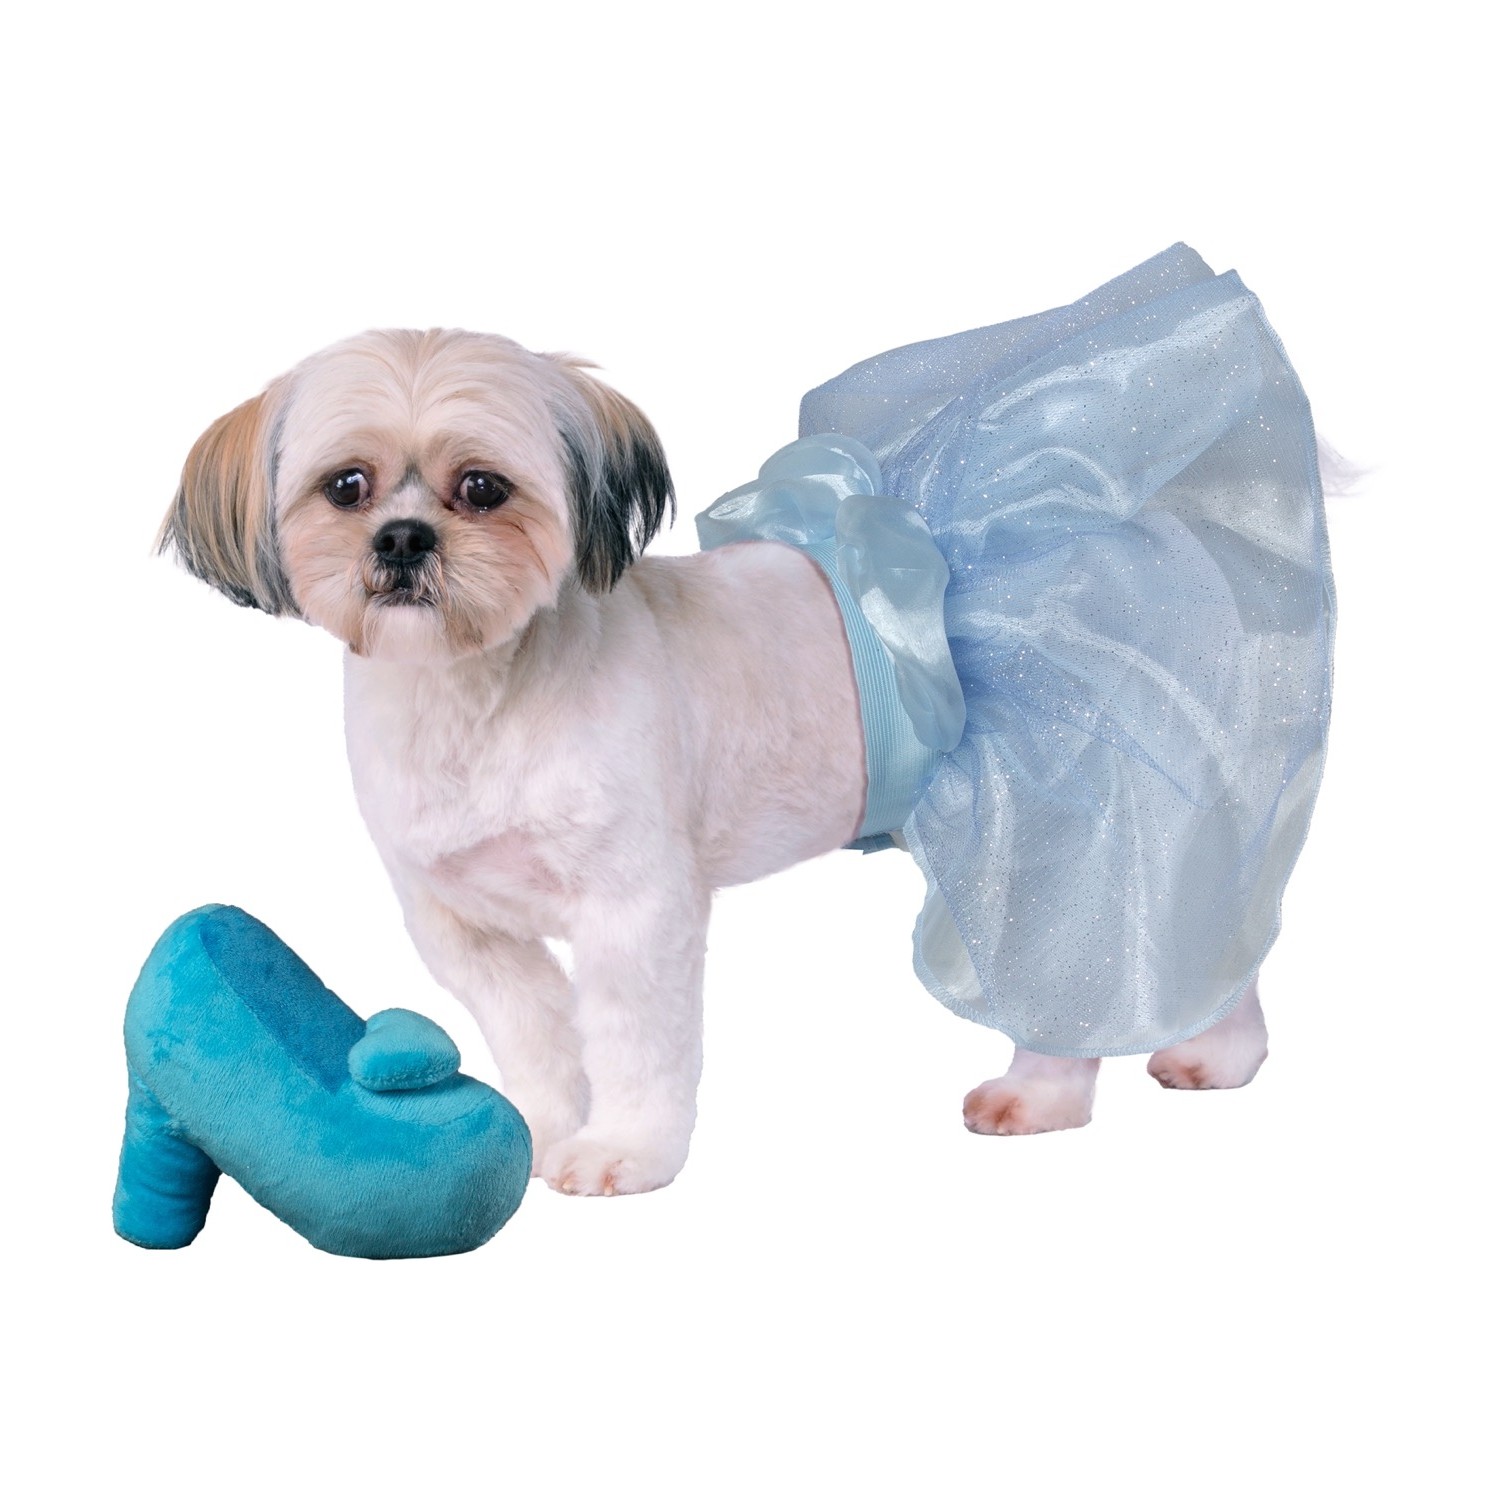 Disney Cinderella Tutu and Plush Dog Toy Bundle by Rubies